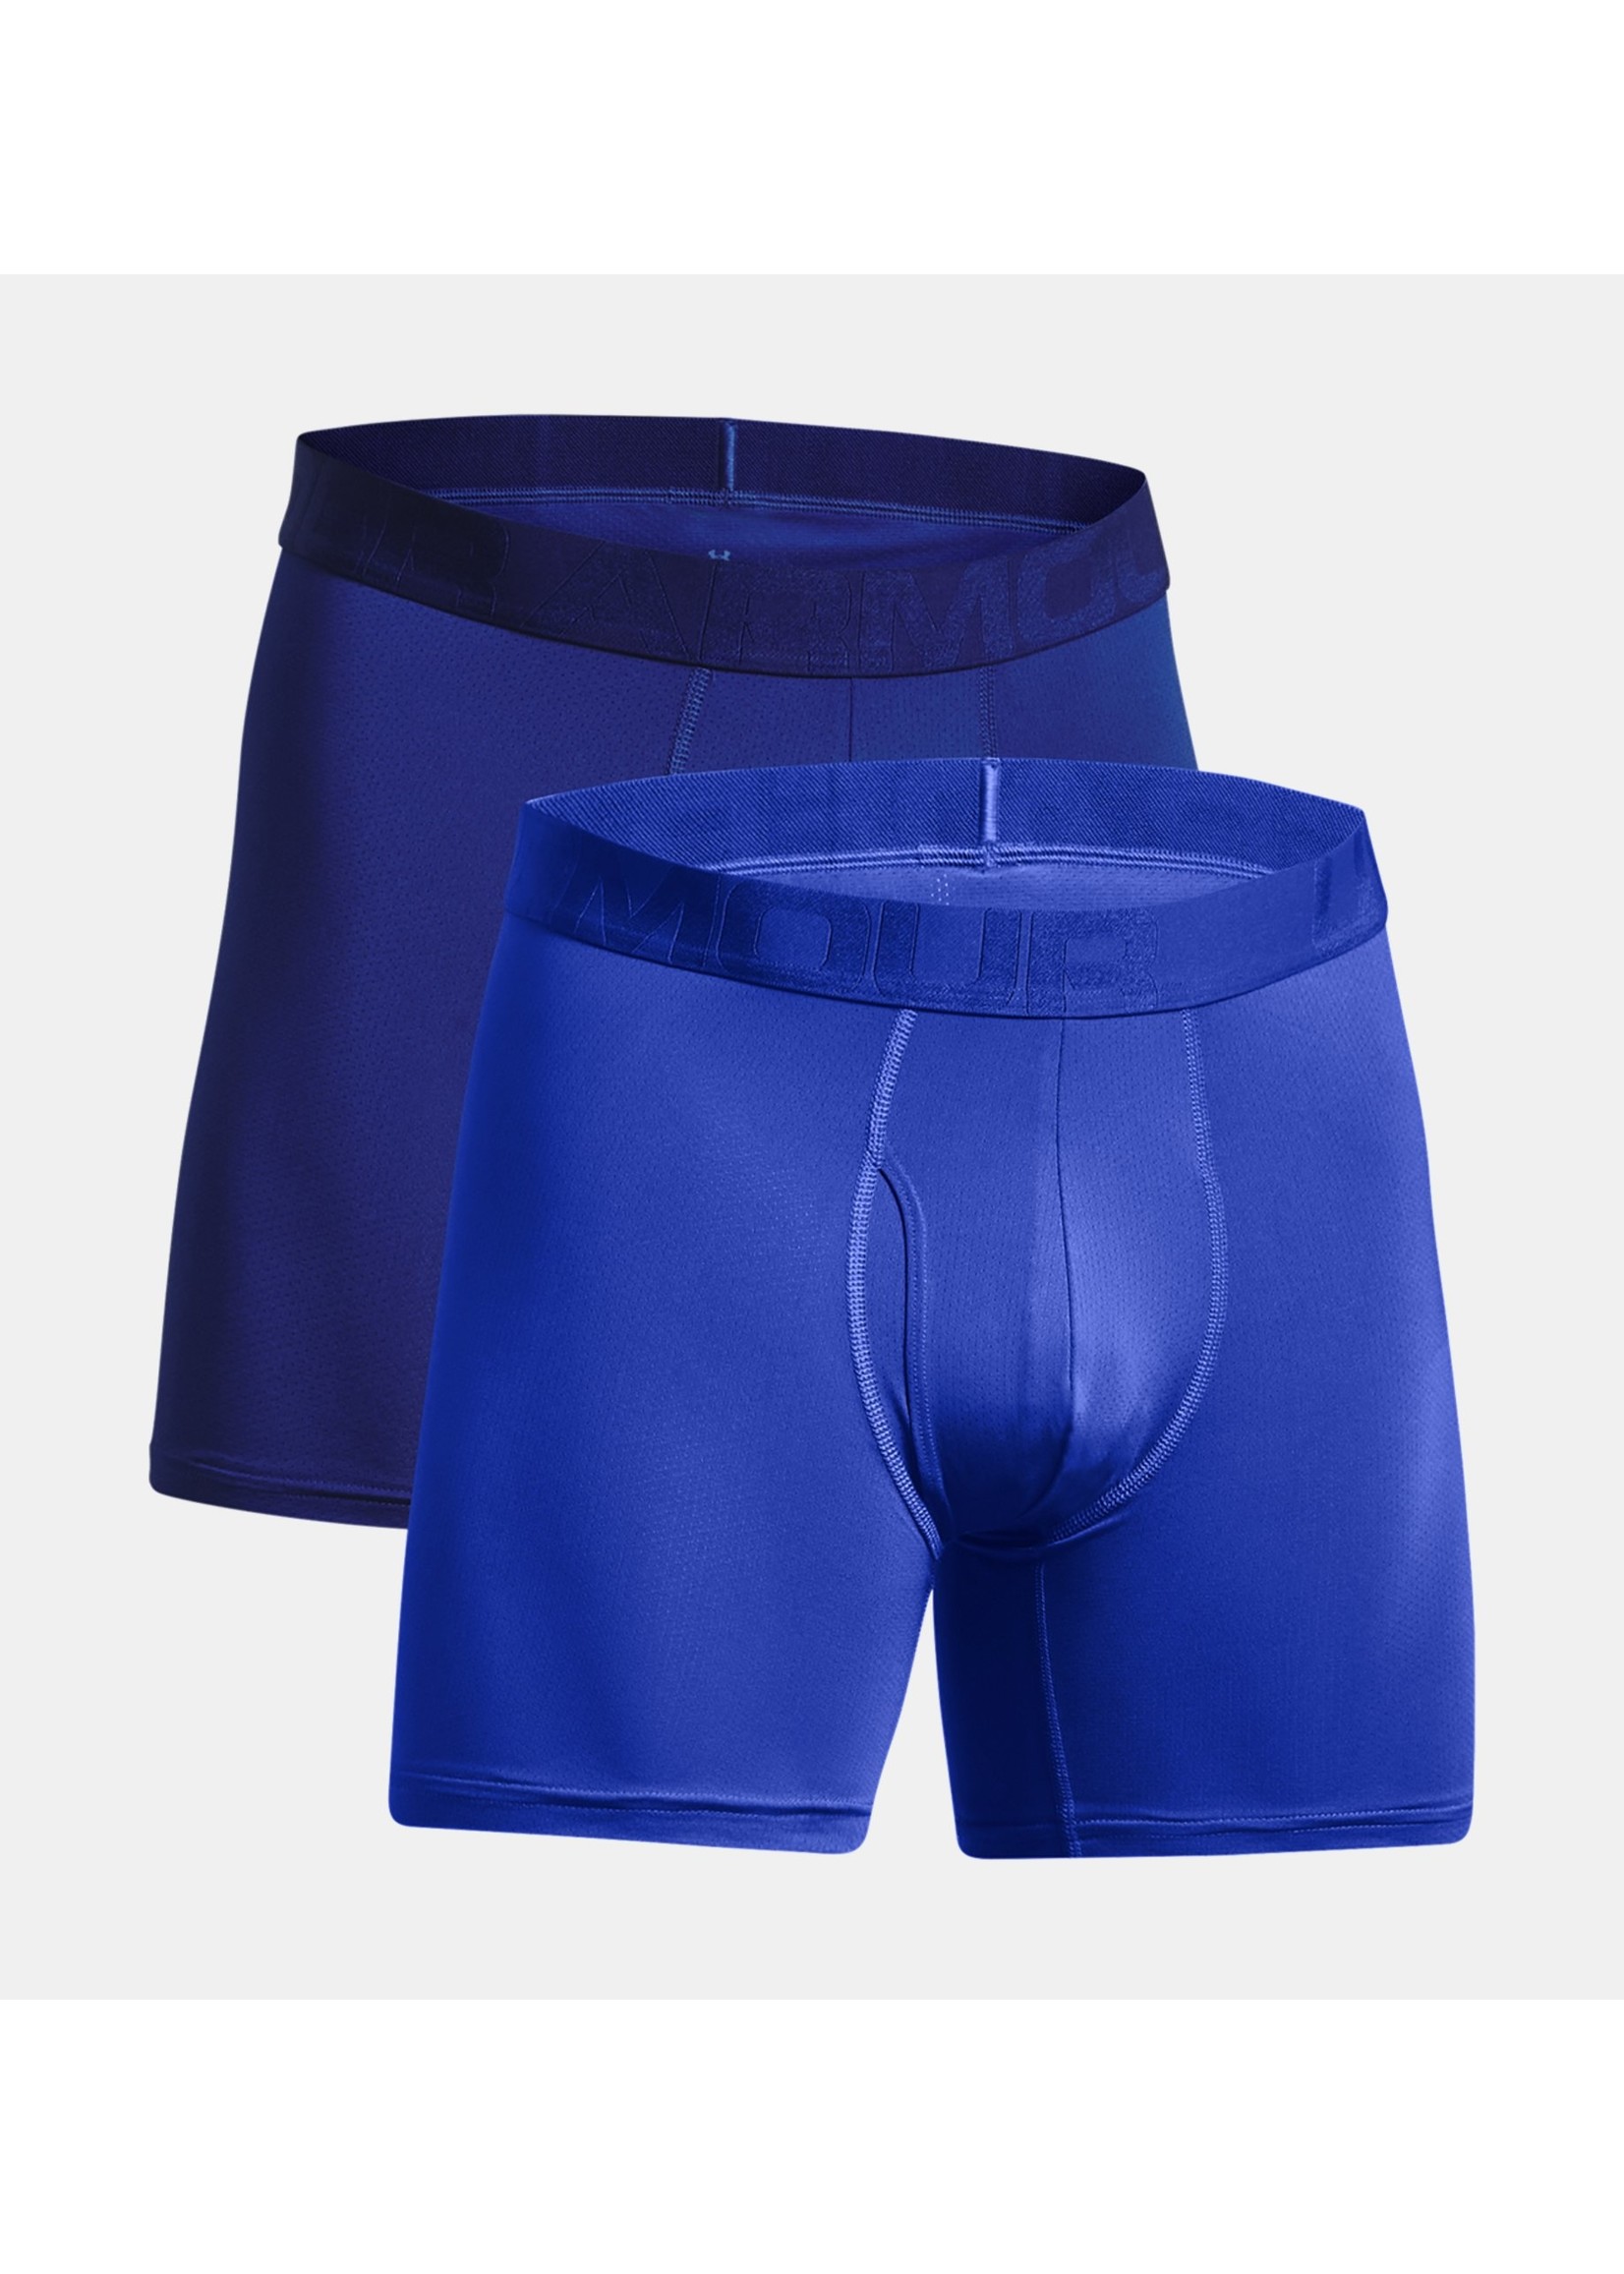 Under Armour Men's Tech Mesh 6 Boxerjock – 2-Pack Underwear